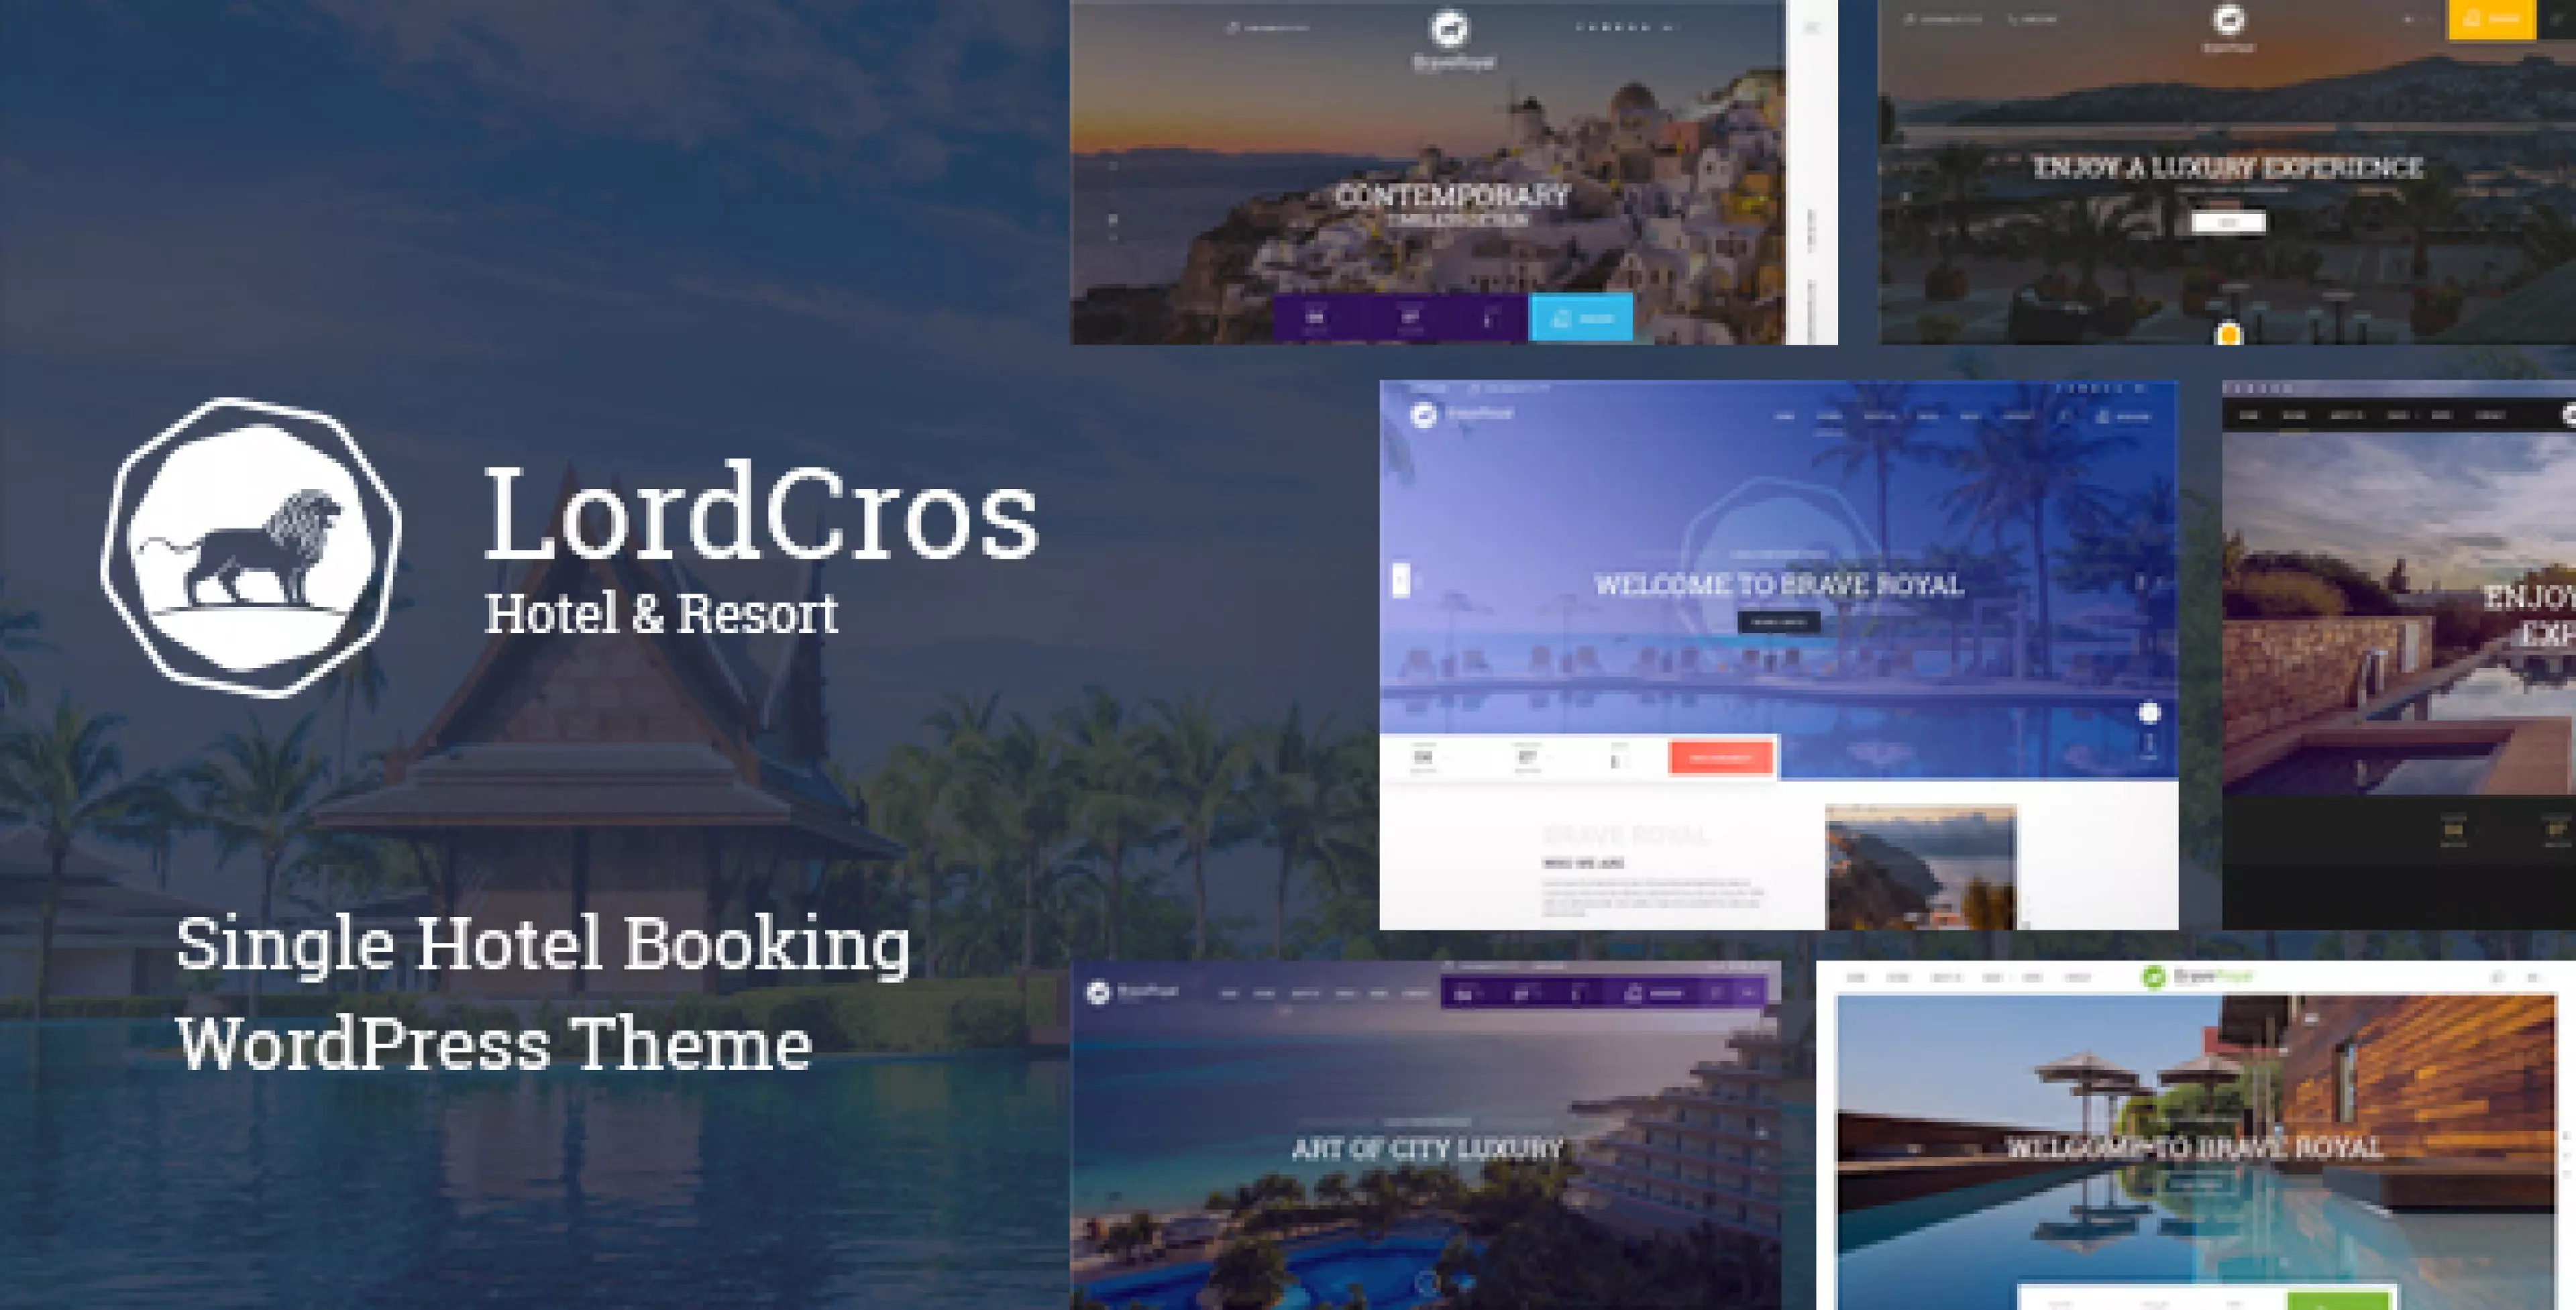 LordCros - Hotel Booking WordPress Theme